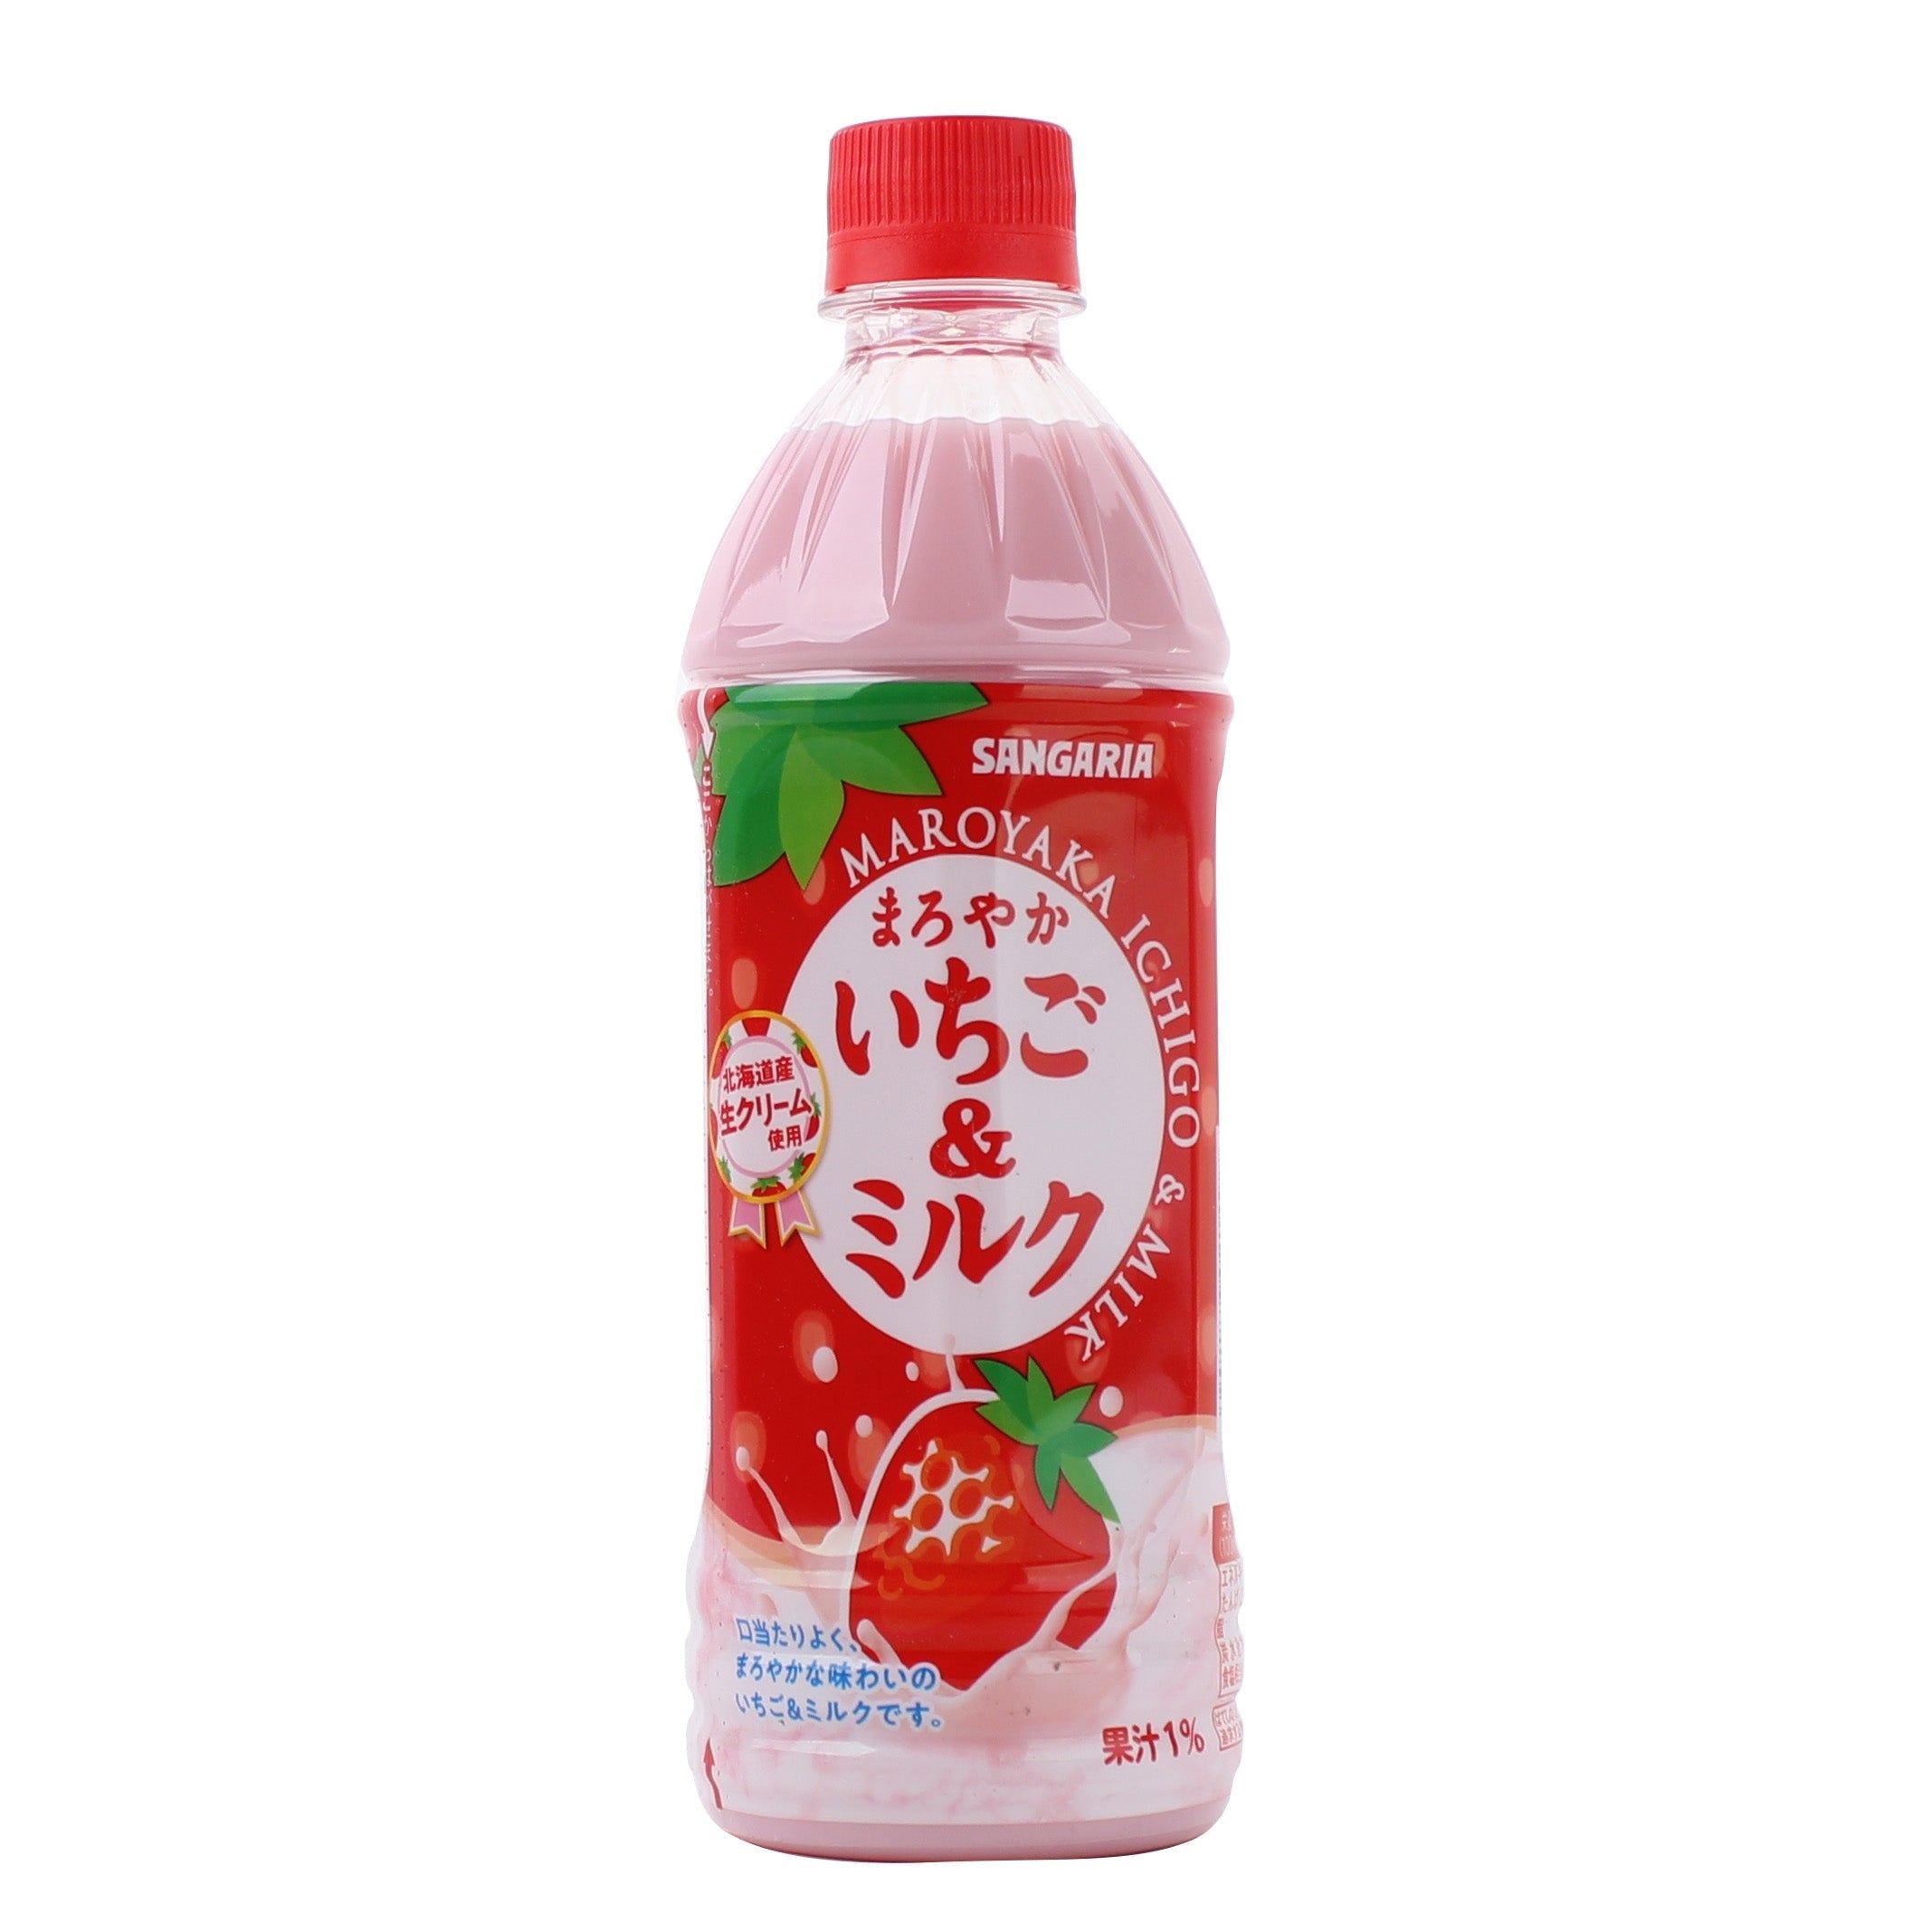 SANGARIA Mild Strawberry & Milk Drink 500ml PET (24 Pack)